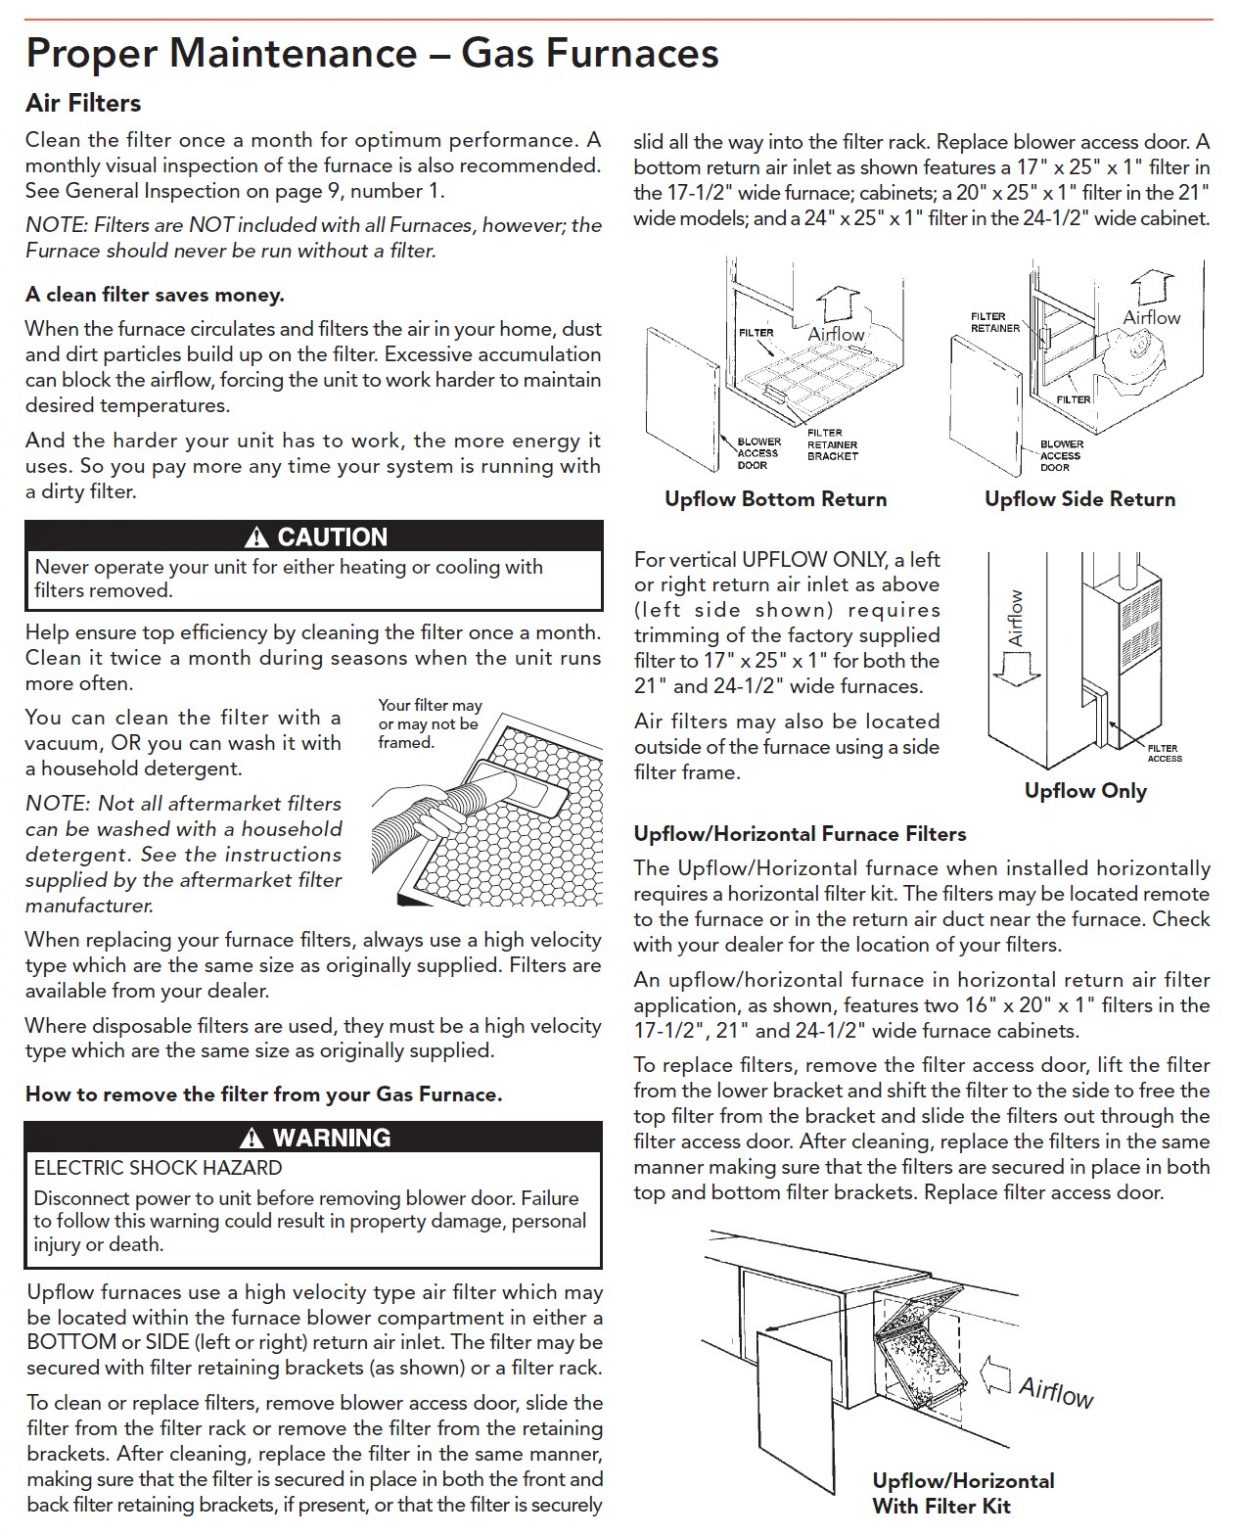 View and Download Trane xe80 Manual pdf Online